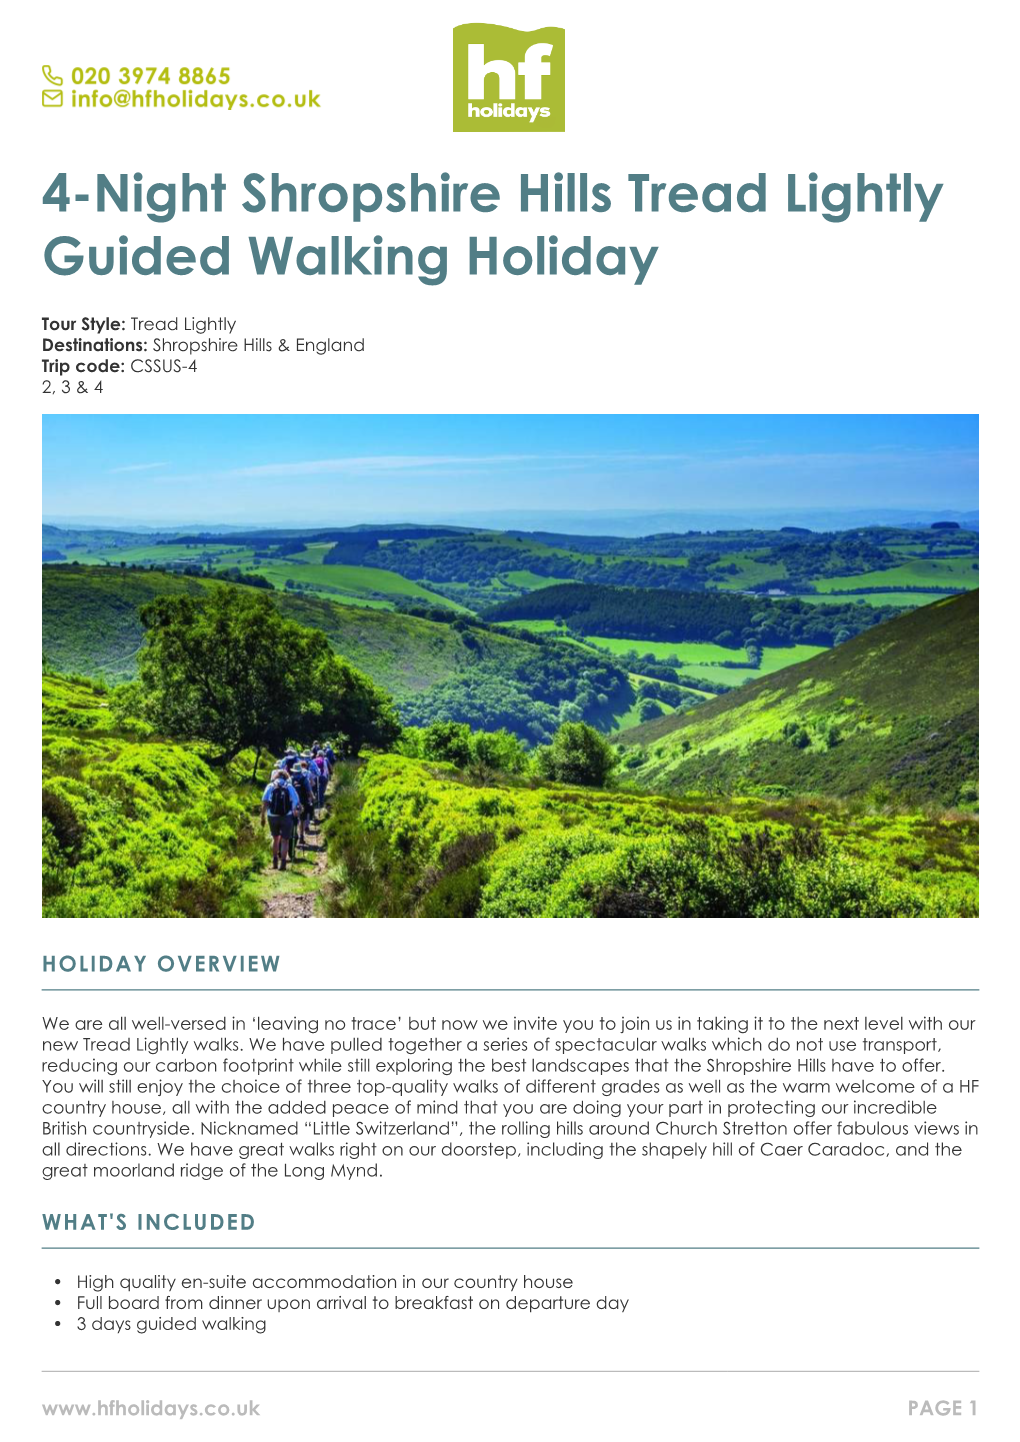 4-Night Shropshire Hills Tread Lightly Guided Walking Holiday